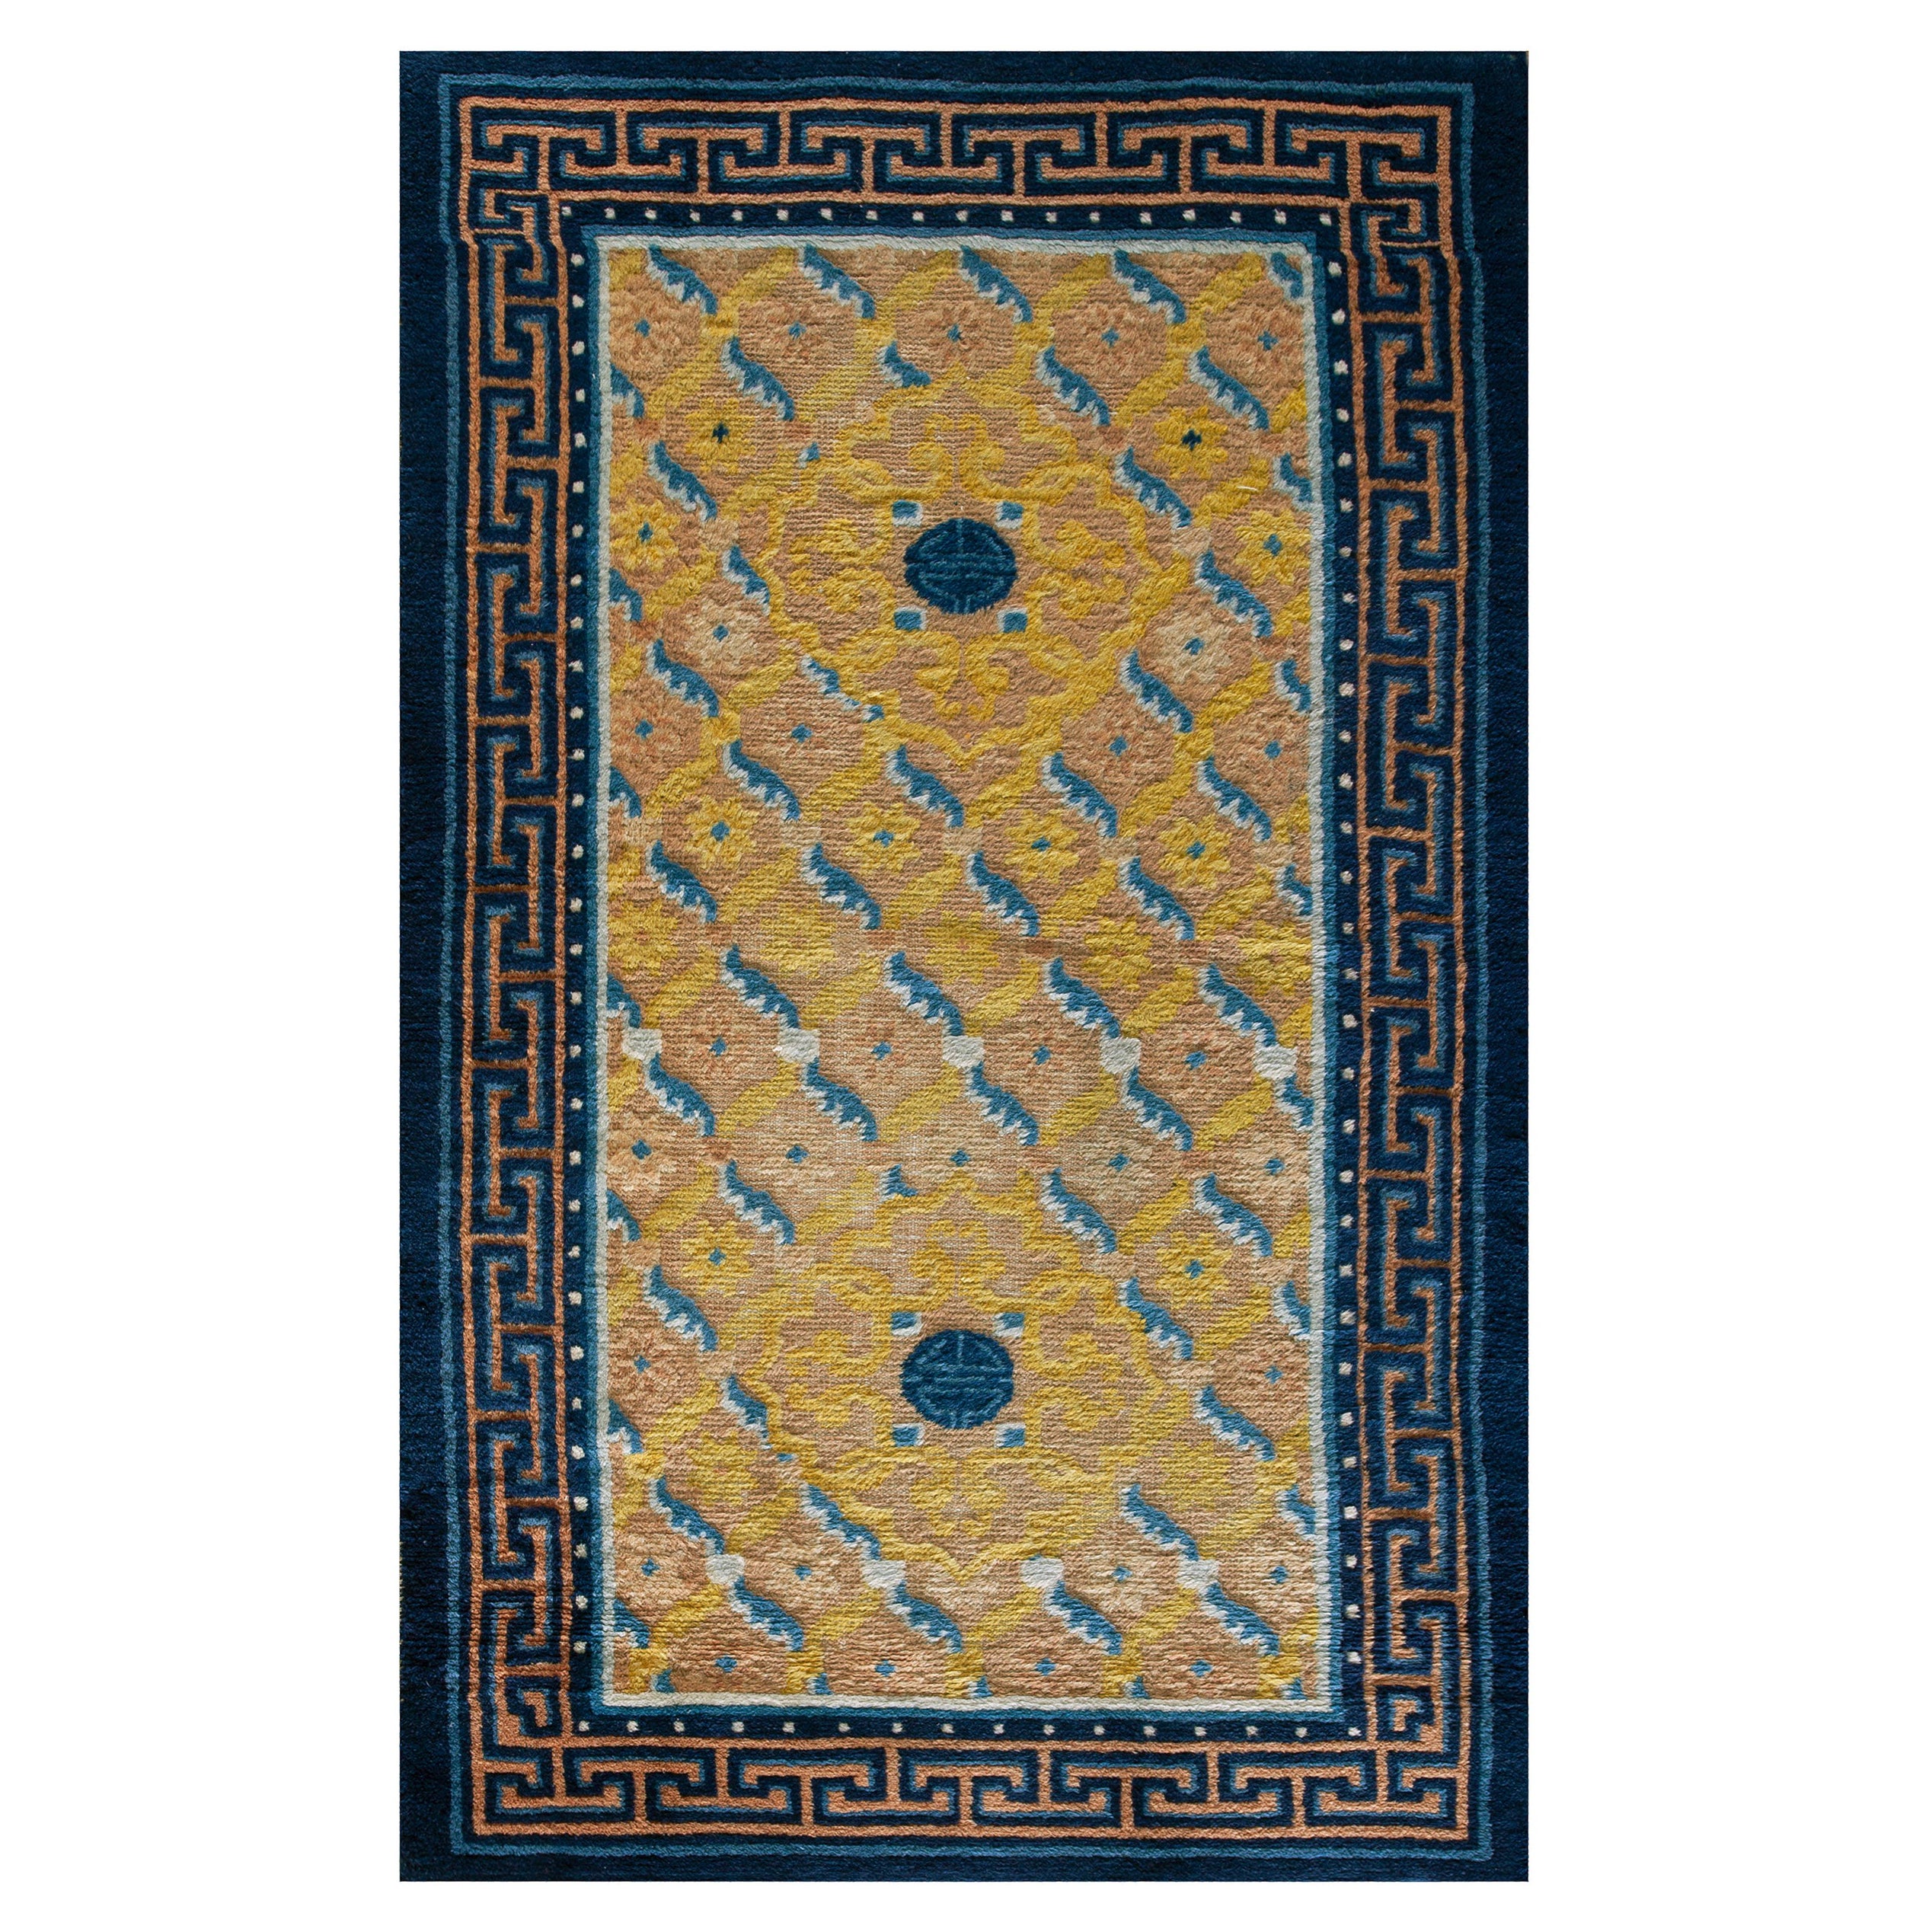 Mid 19th Century Chinese Ningxia Carpet ( 2'9" x 4'8" - 83 x 142 cm )